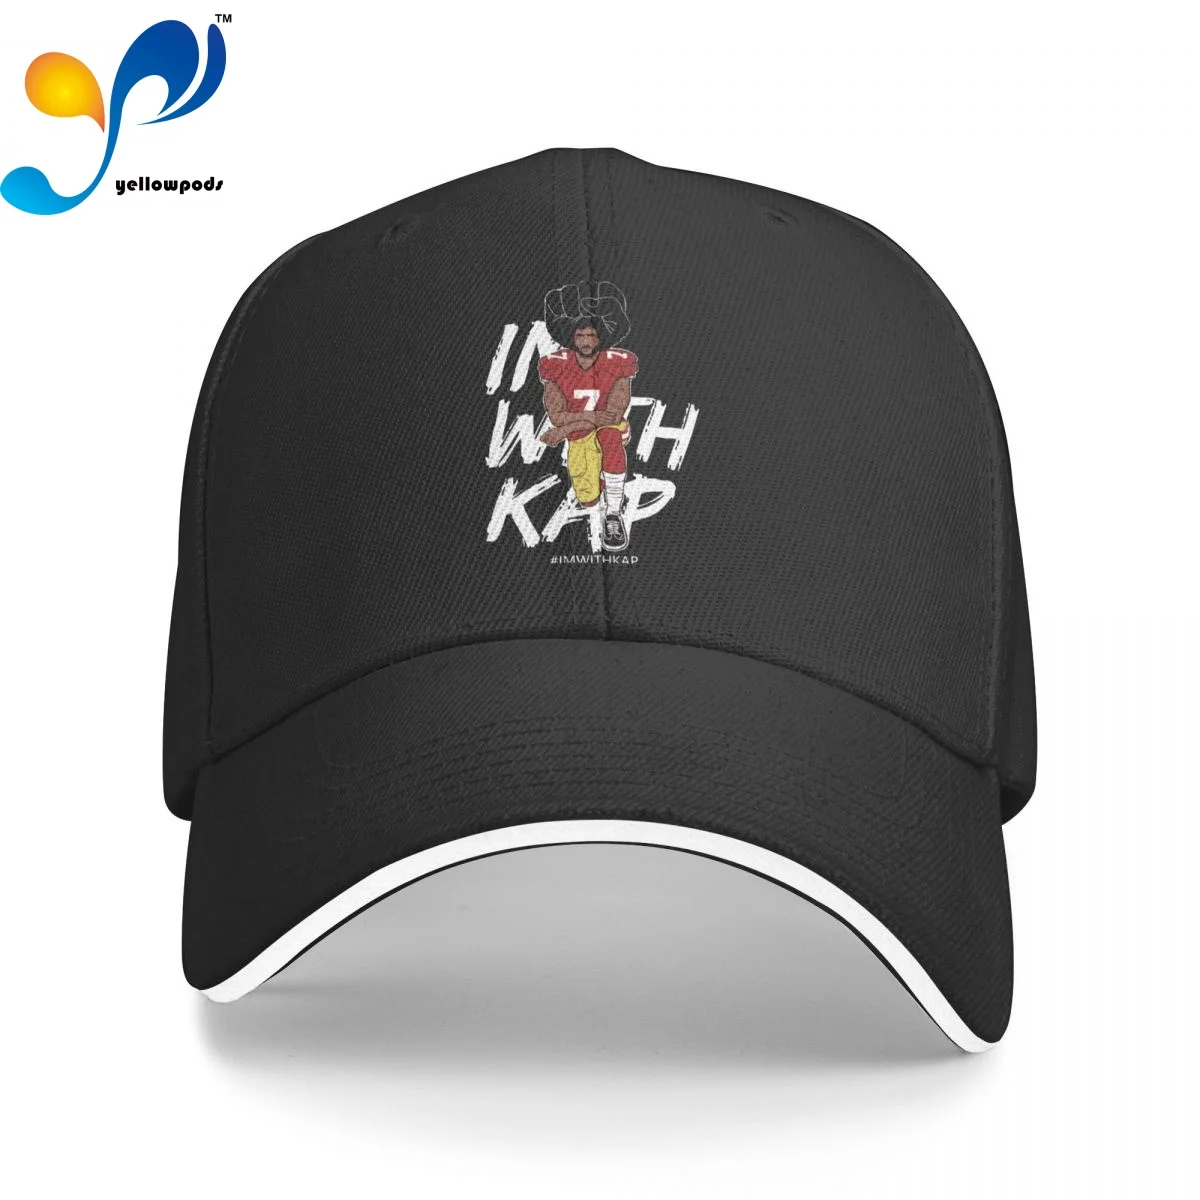 

ImWithKap Kap Kneeling Kaepernick Men's New Baseball Cap Fashion Sun Hats Caps for Men and Women